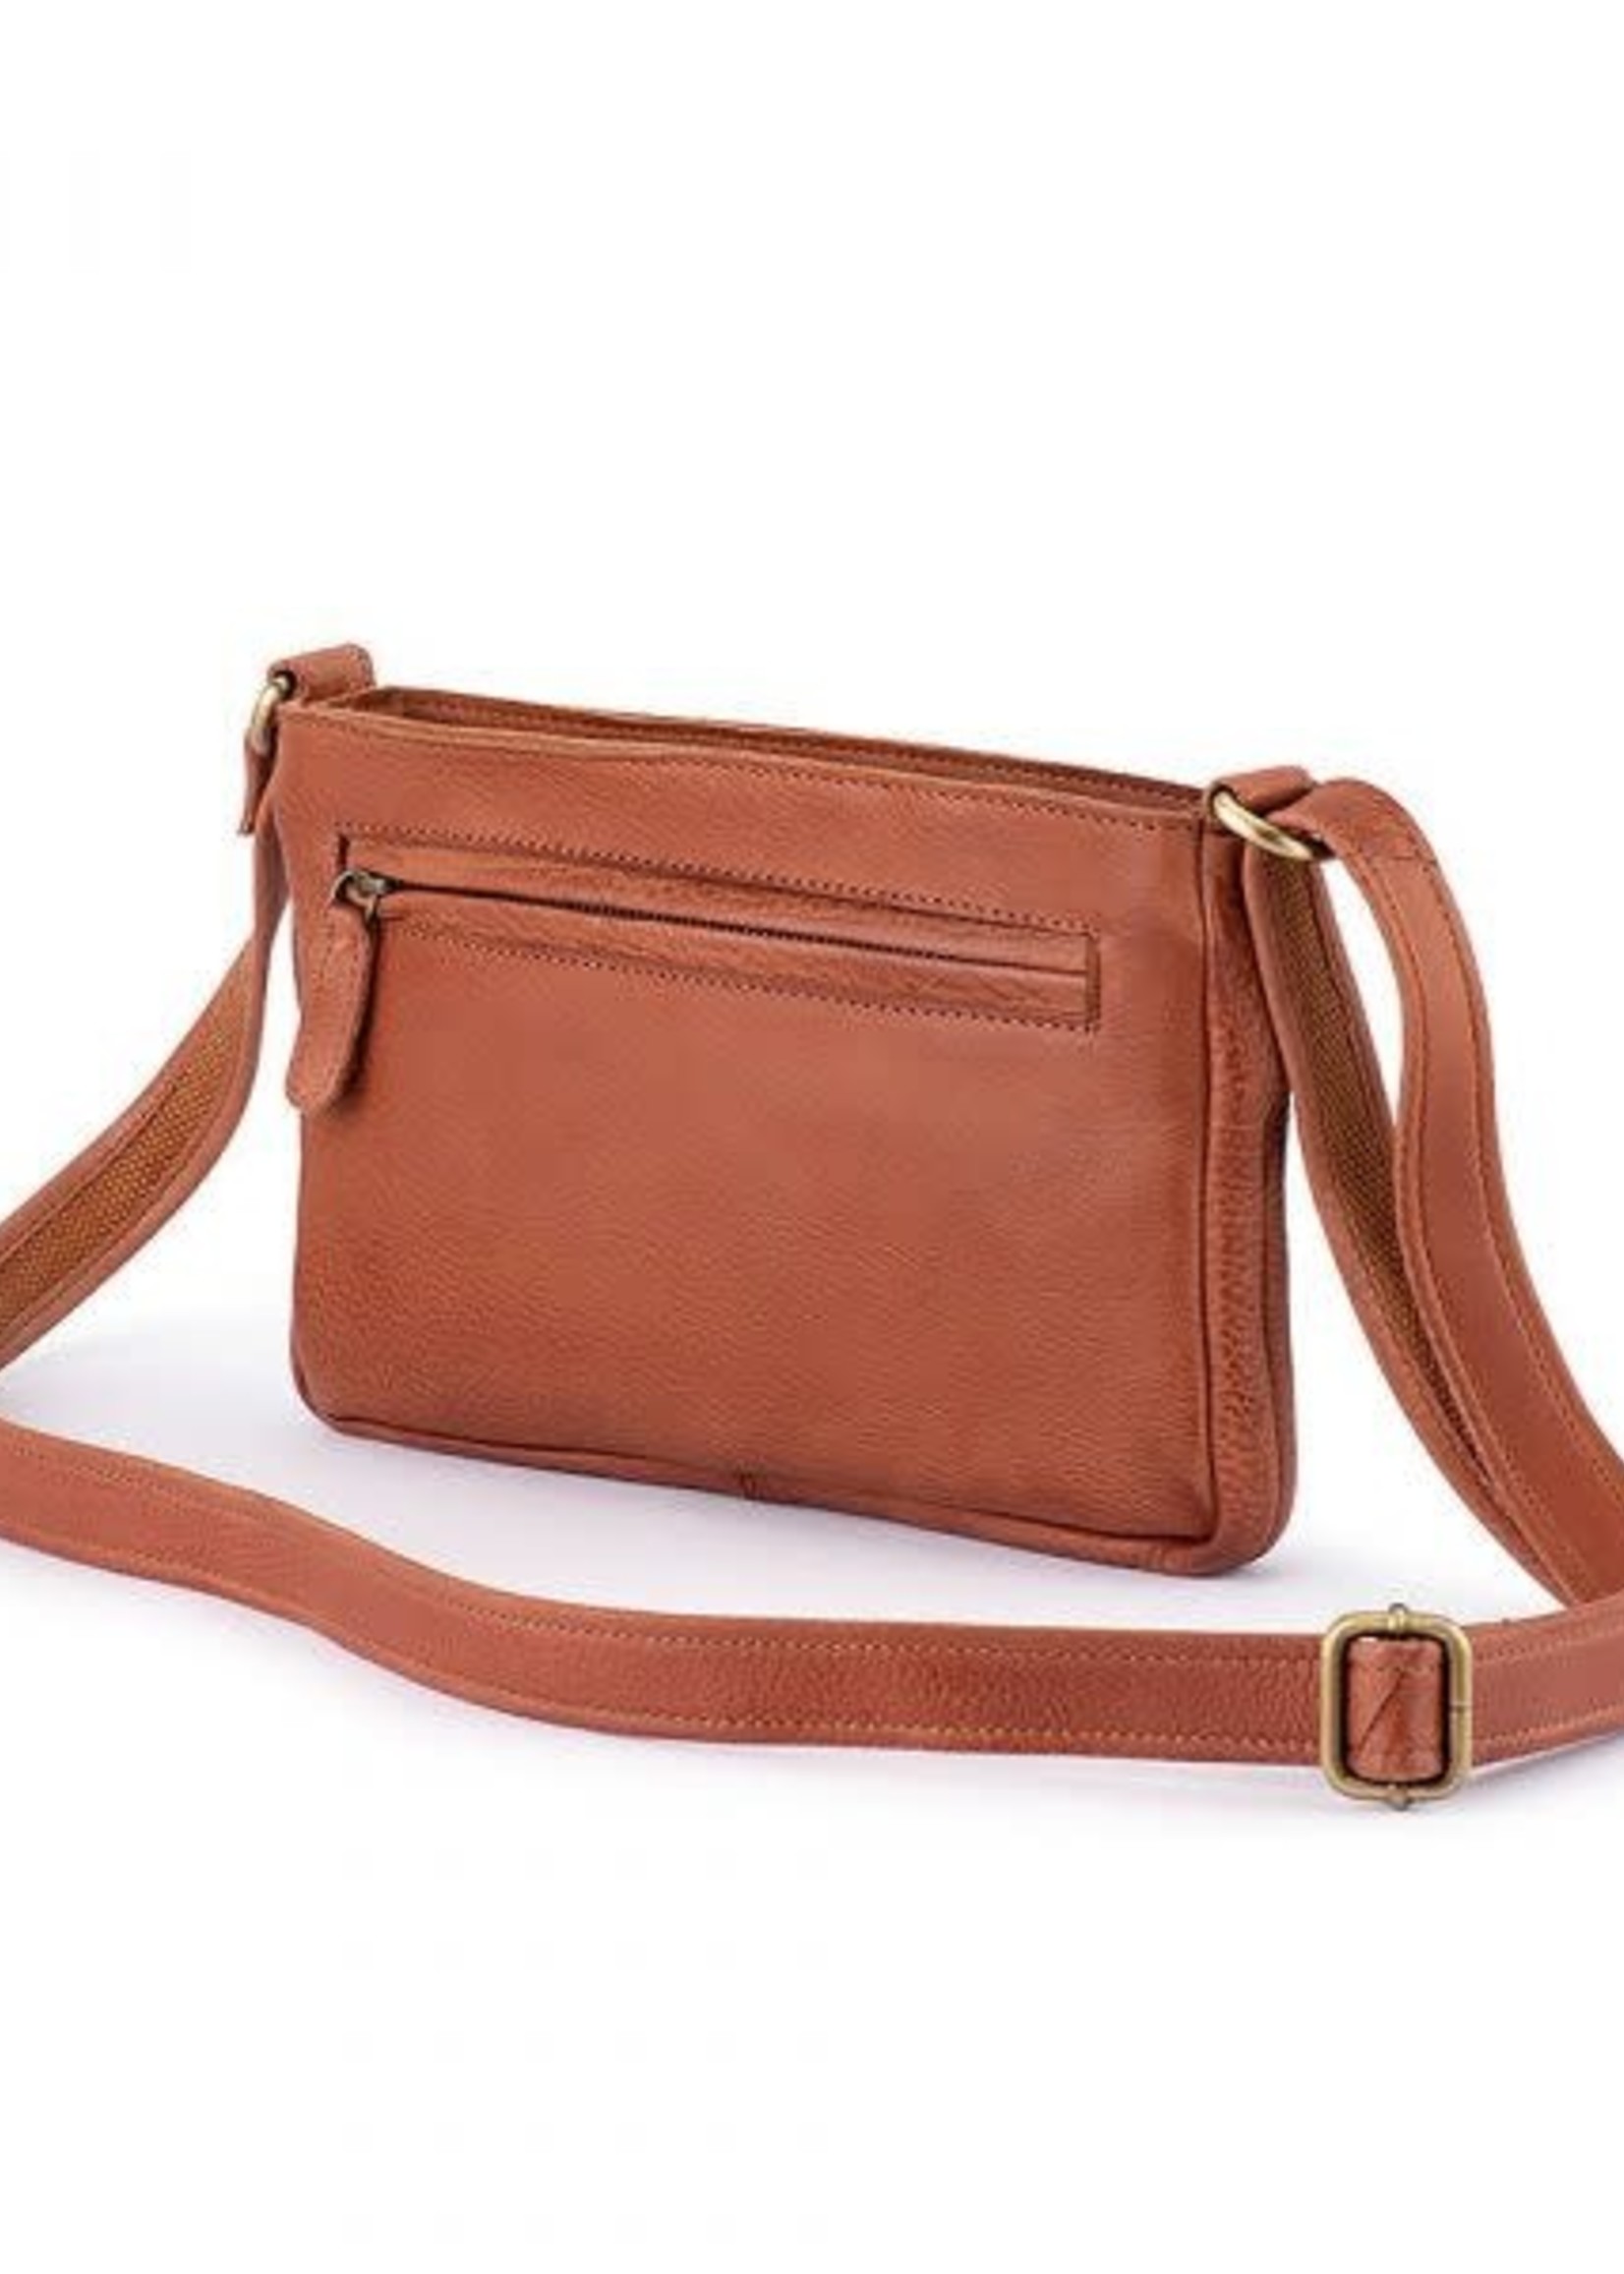 Verona Cognac Crossbody Leather Shoulder/Sling Bag